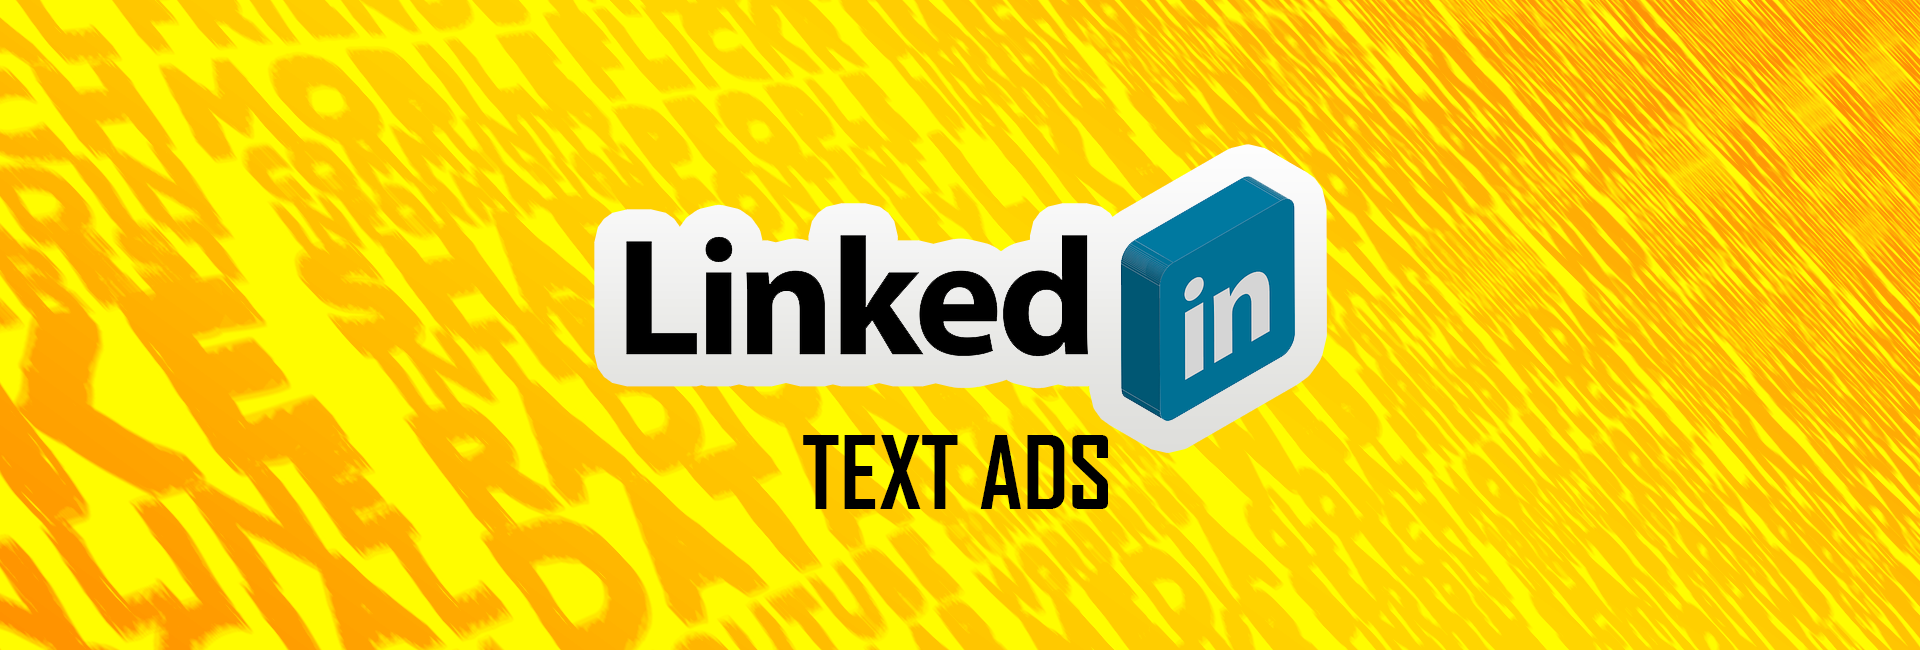 LinkedIn Text Ads : A Tool for B2B Marketing